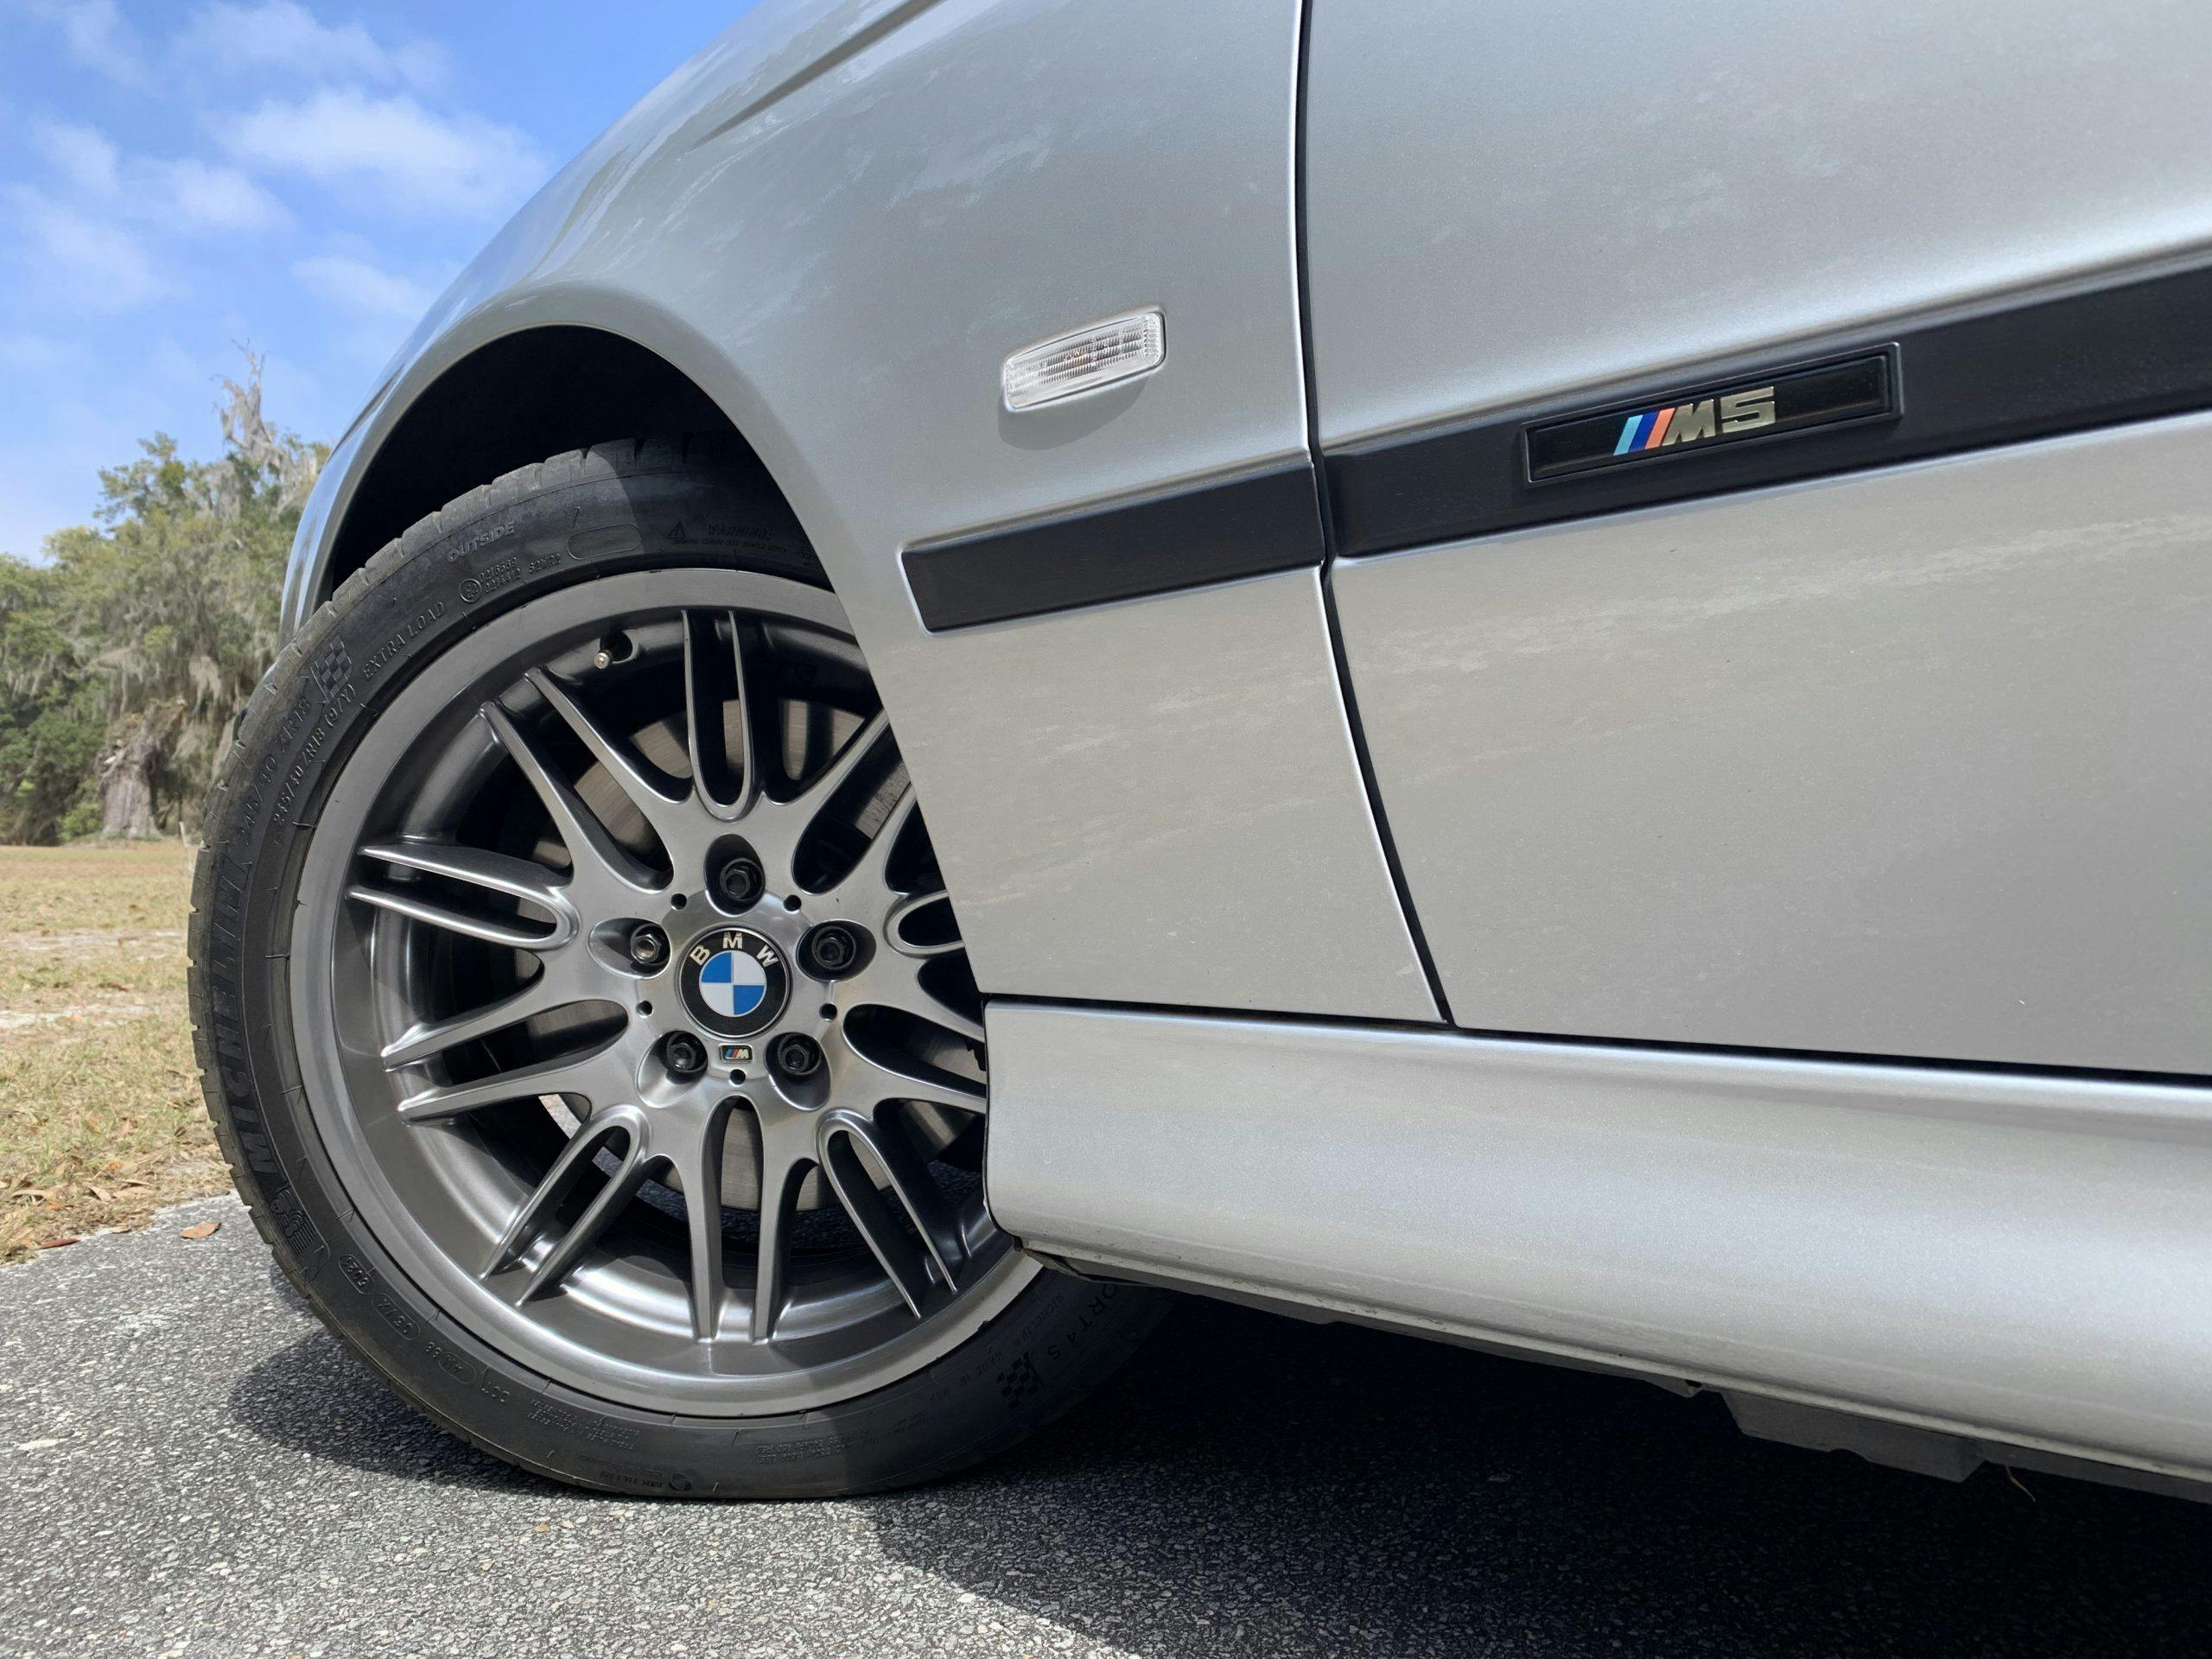 1999 BMW M5 E39 wheel parallel spoke 18 inch alloy